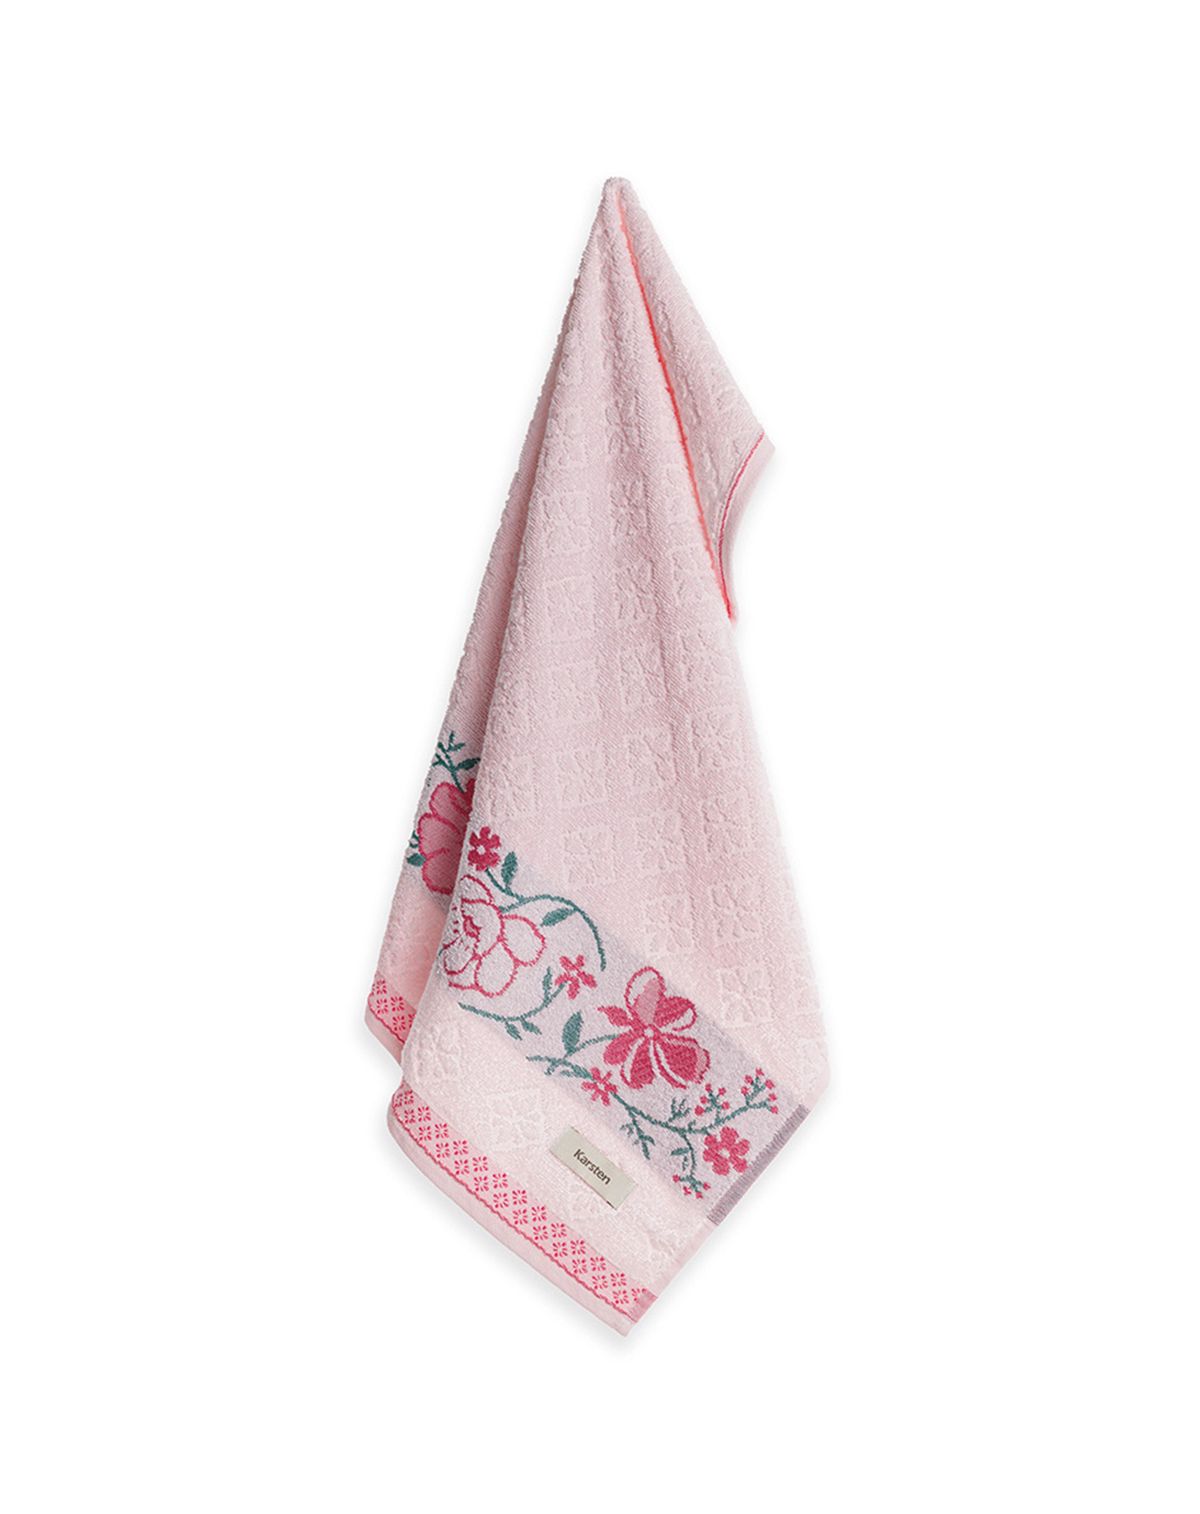 689335001-toalha-de-rosto-karsten-bordada-floral-rosa-u-eda